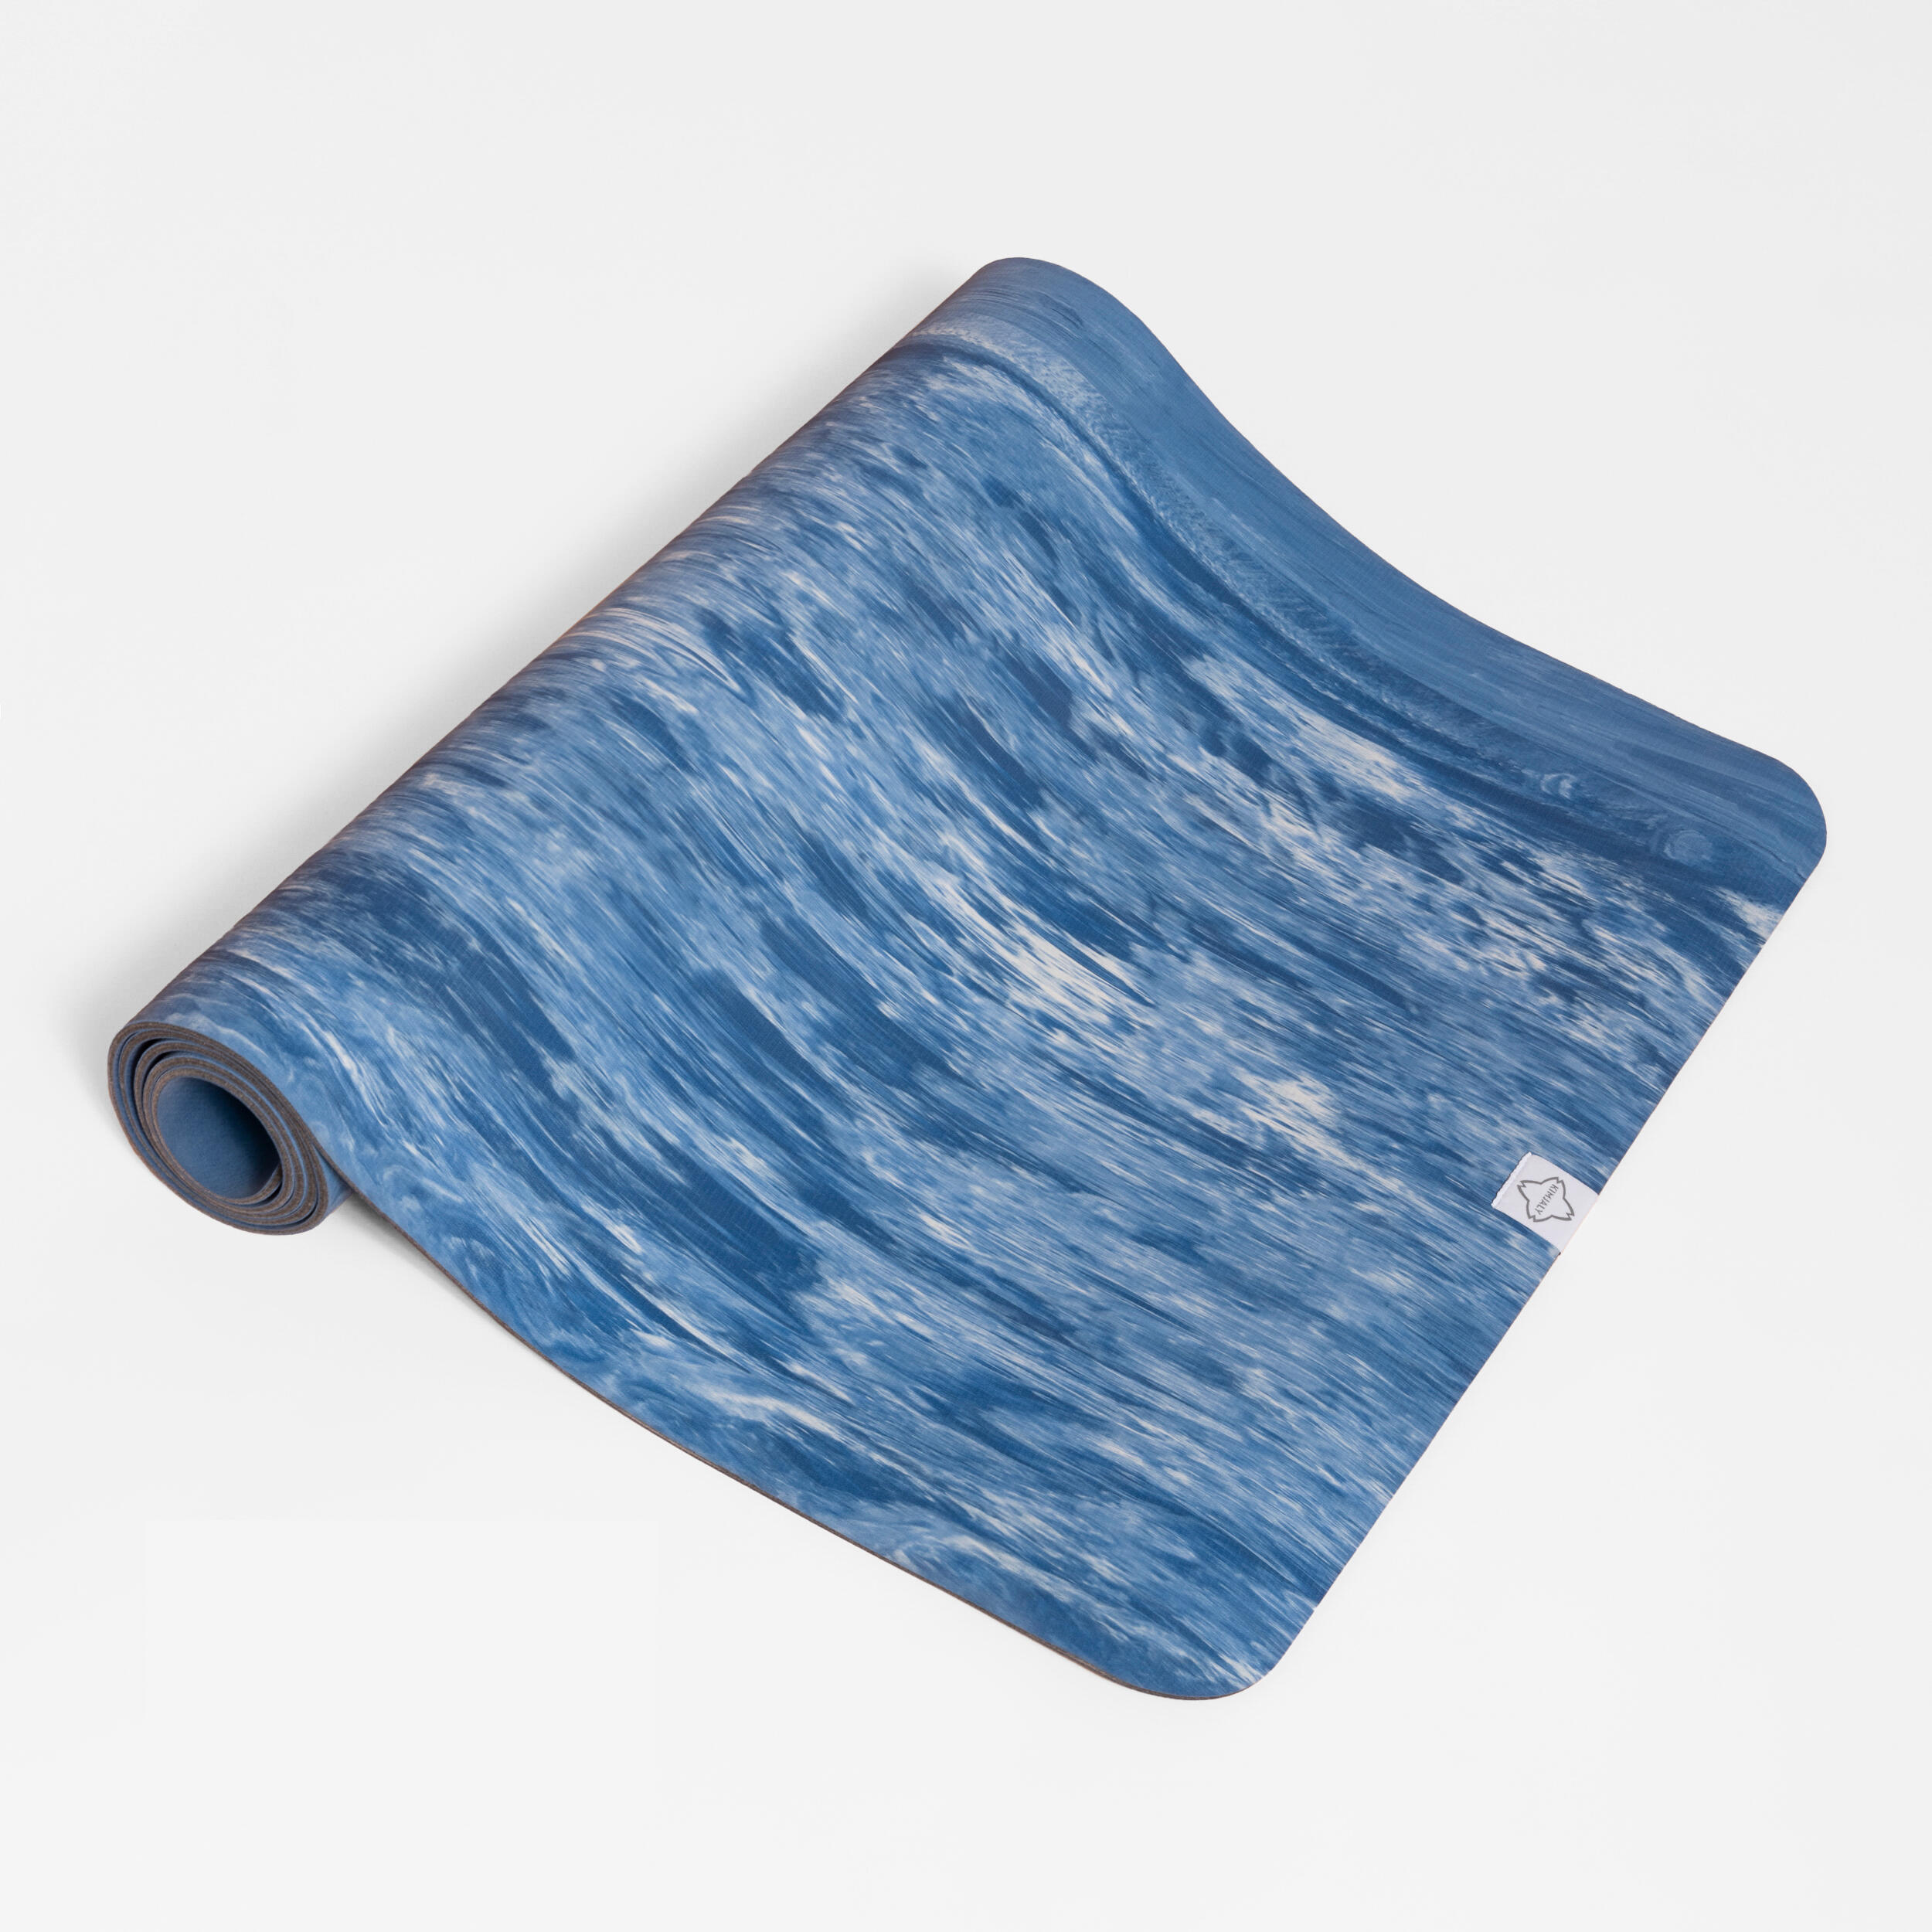 185 cm x 65 cm x 5 mm Yoga Mat Grip - Blue 2/6